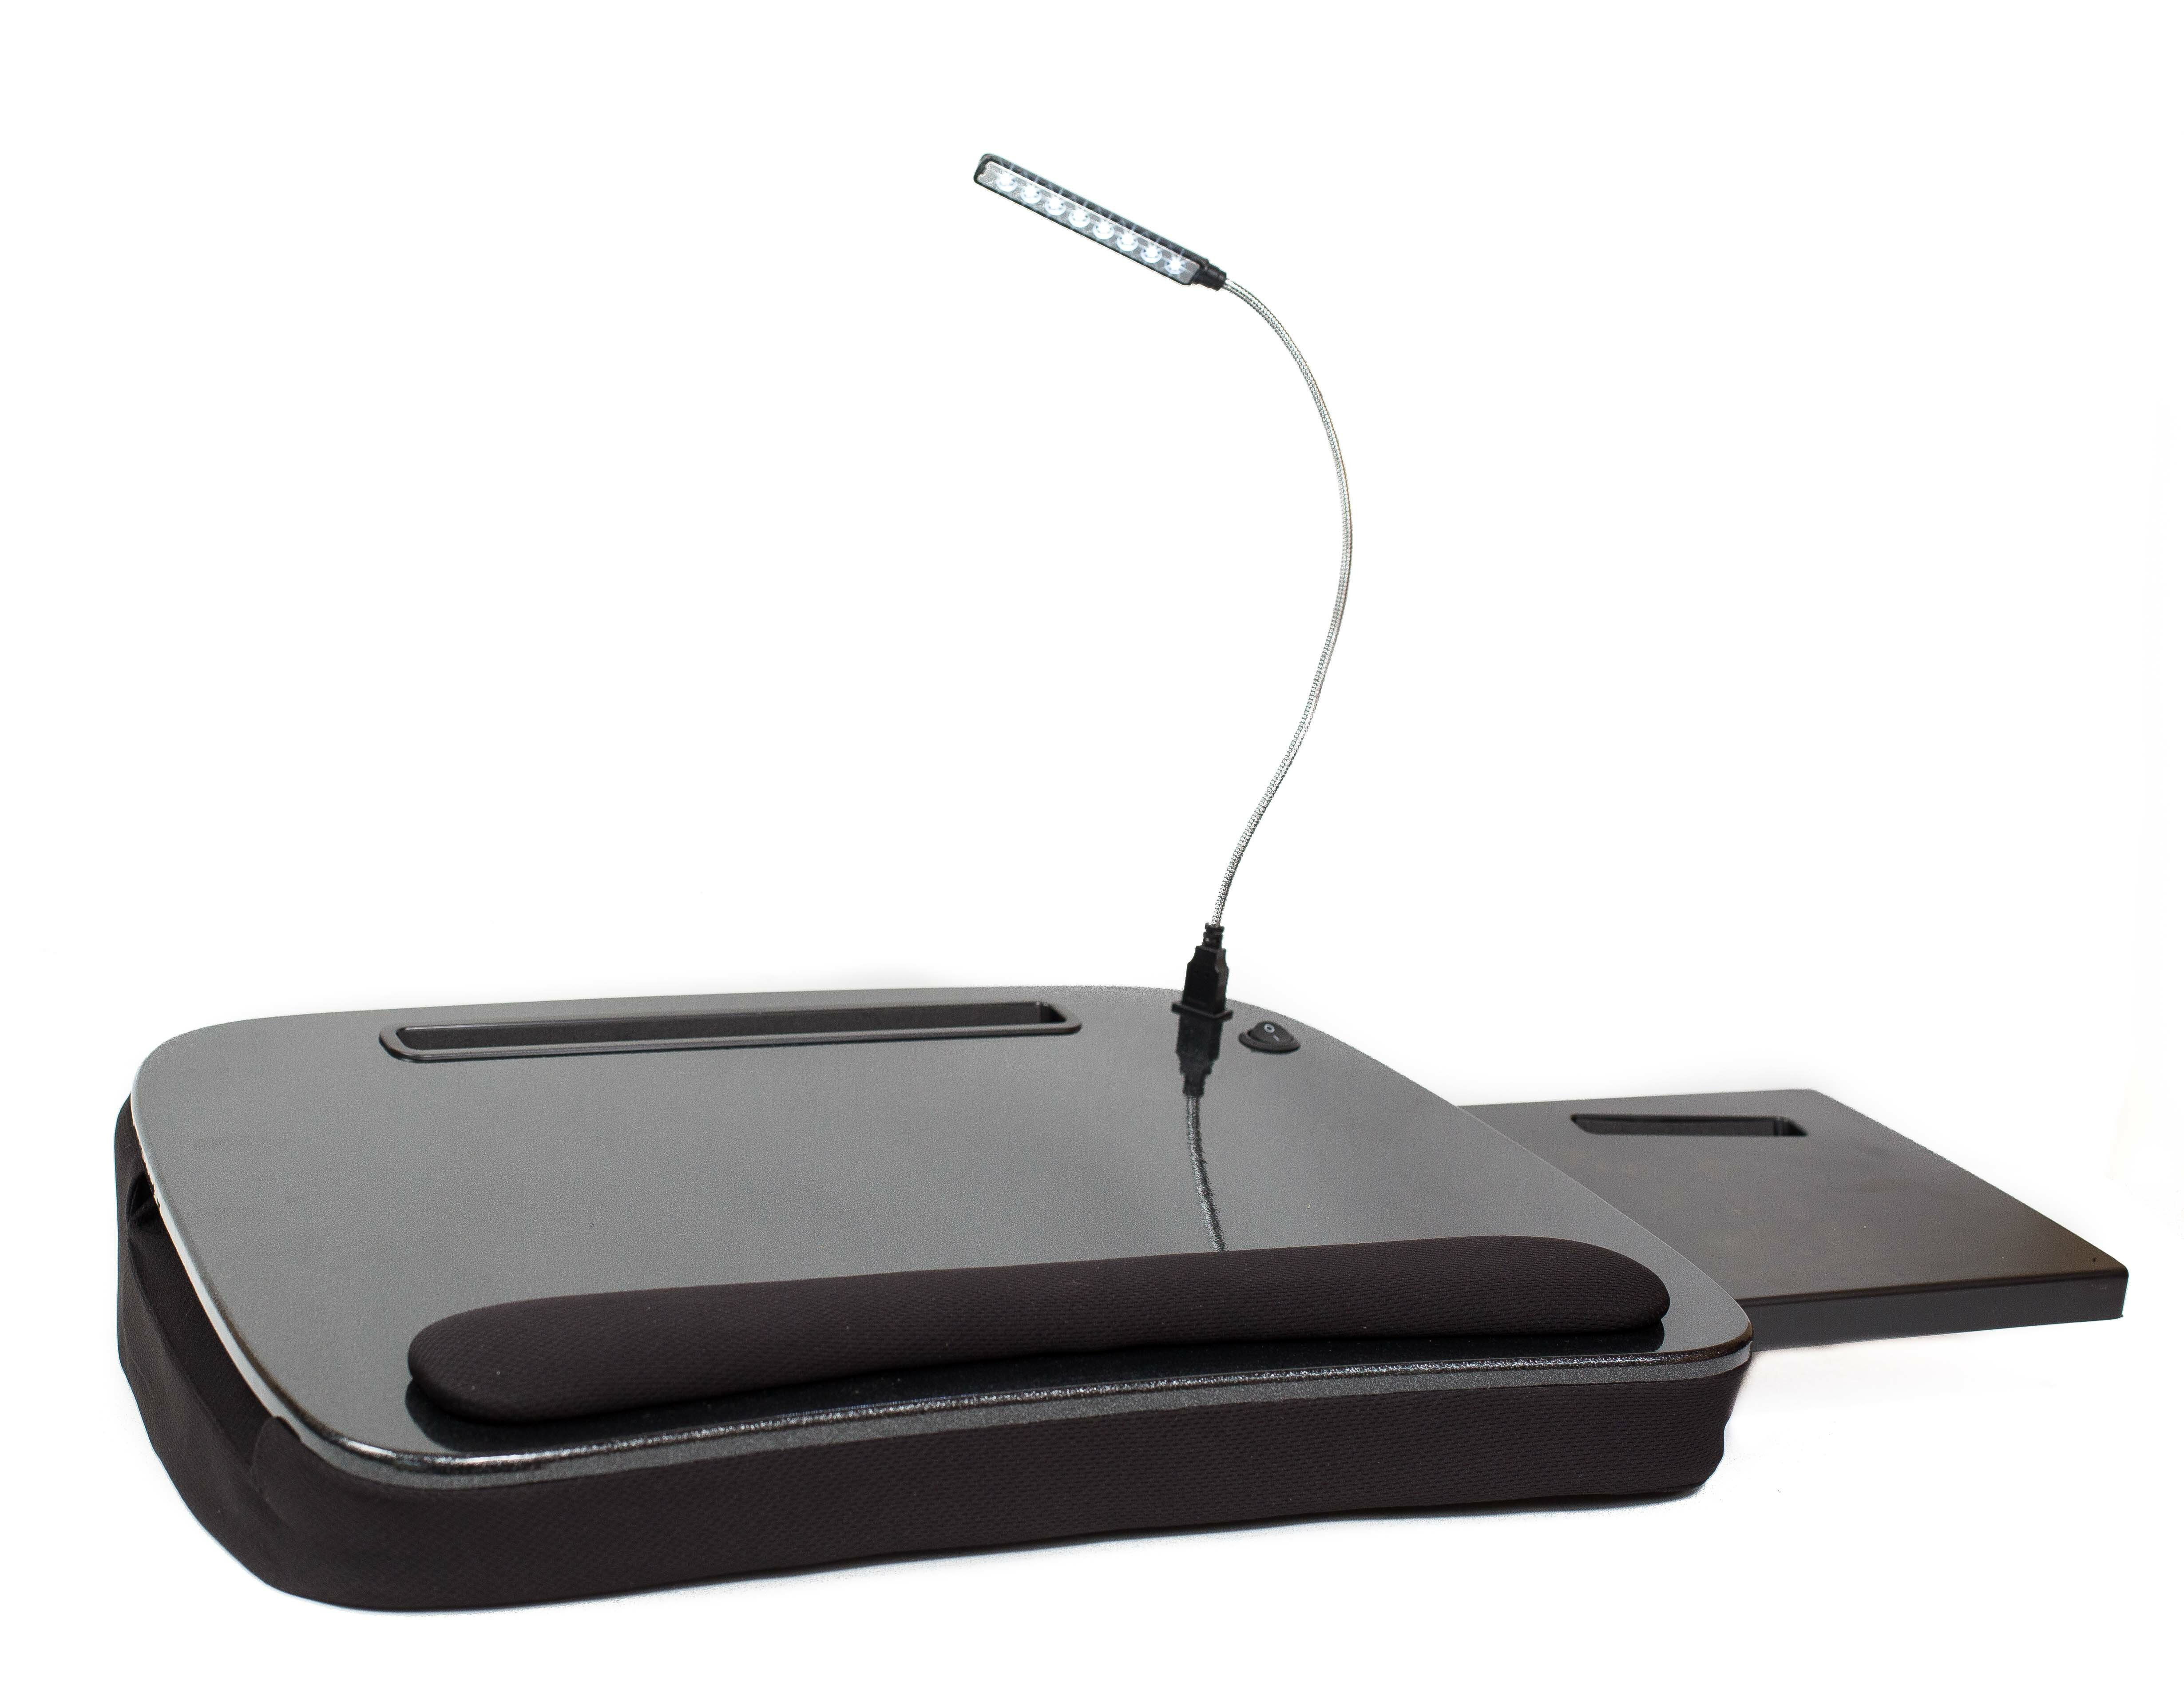 Sofia + Sam Multi Tasking Memory Foam Lap Desk with USB Light and Mouse Pad  - black